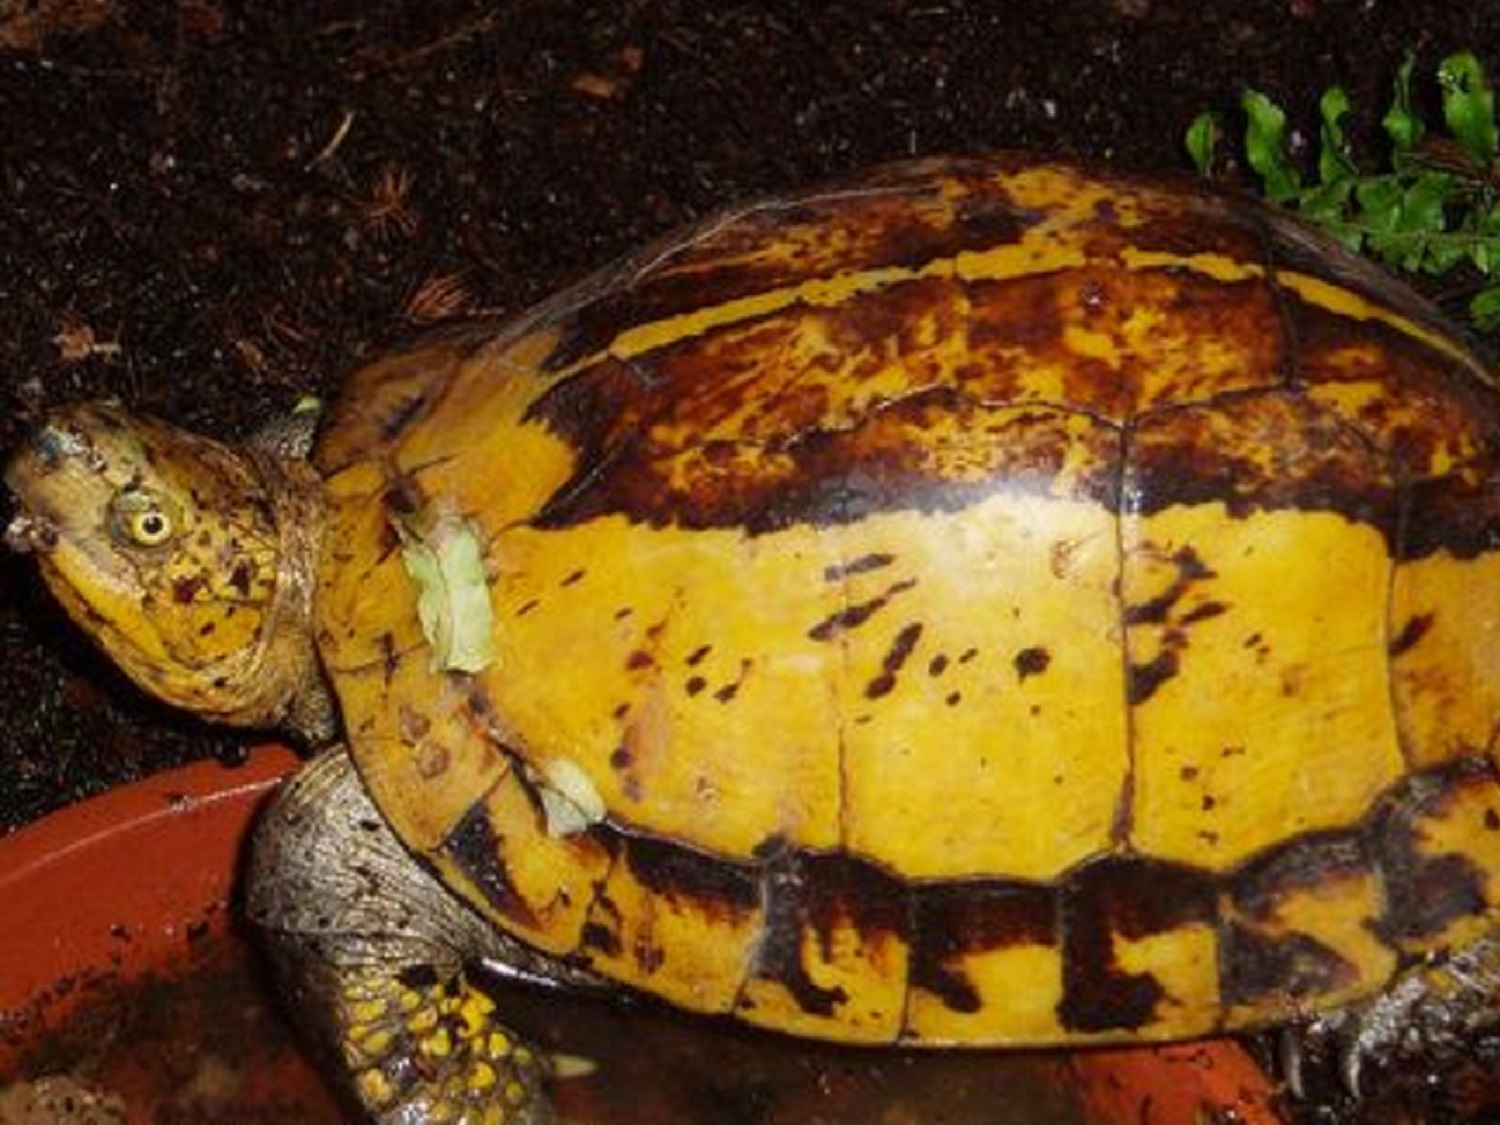 Flowerback box turtle (Cuora galbinifrons galbinifrons) from North Vietnam